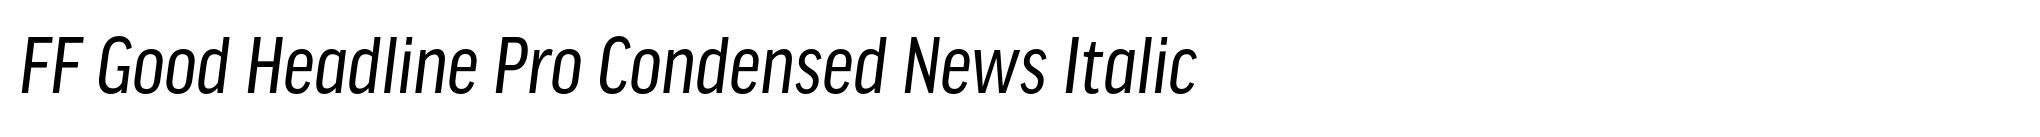 FF Good Headline Pro Condensed News Italic image